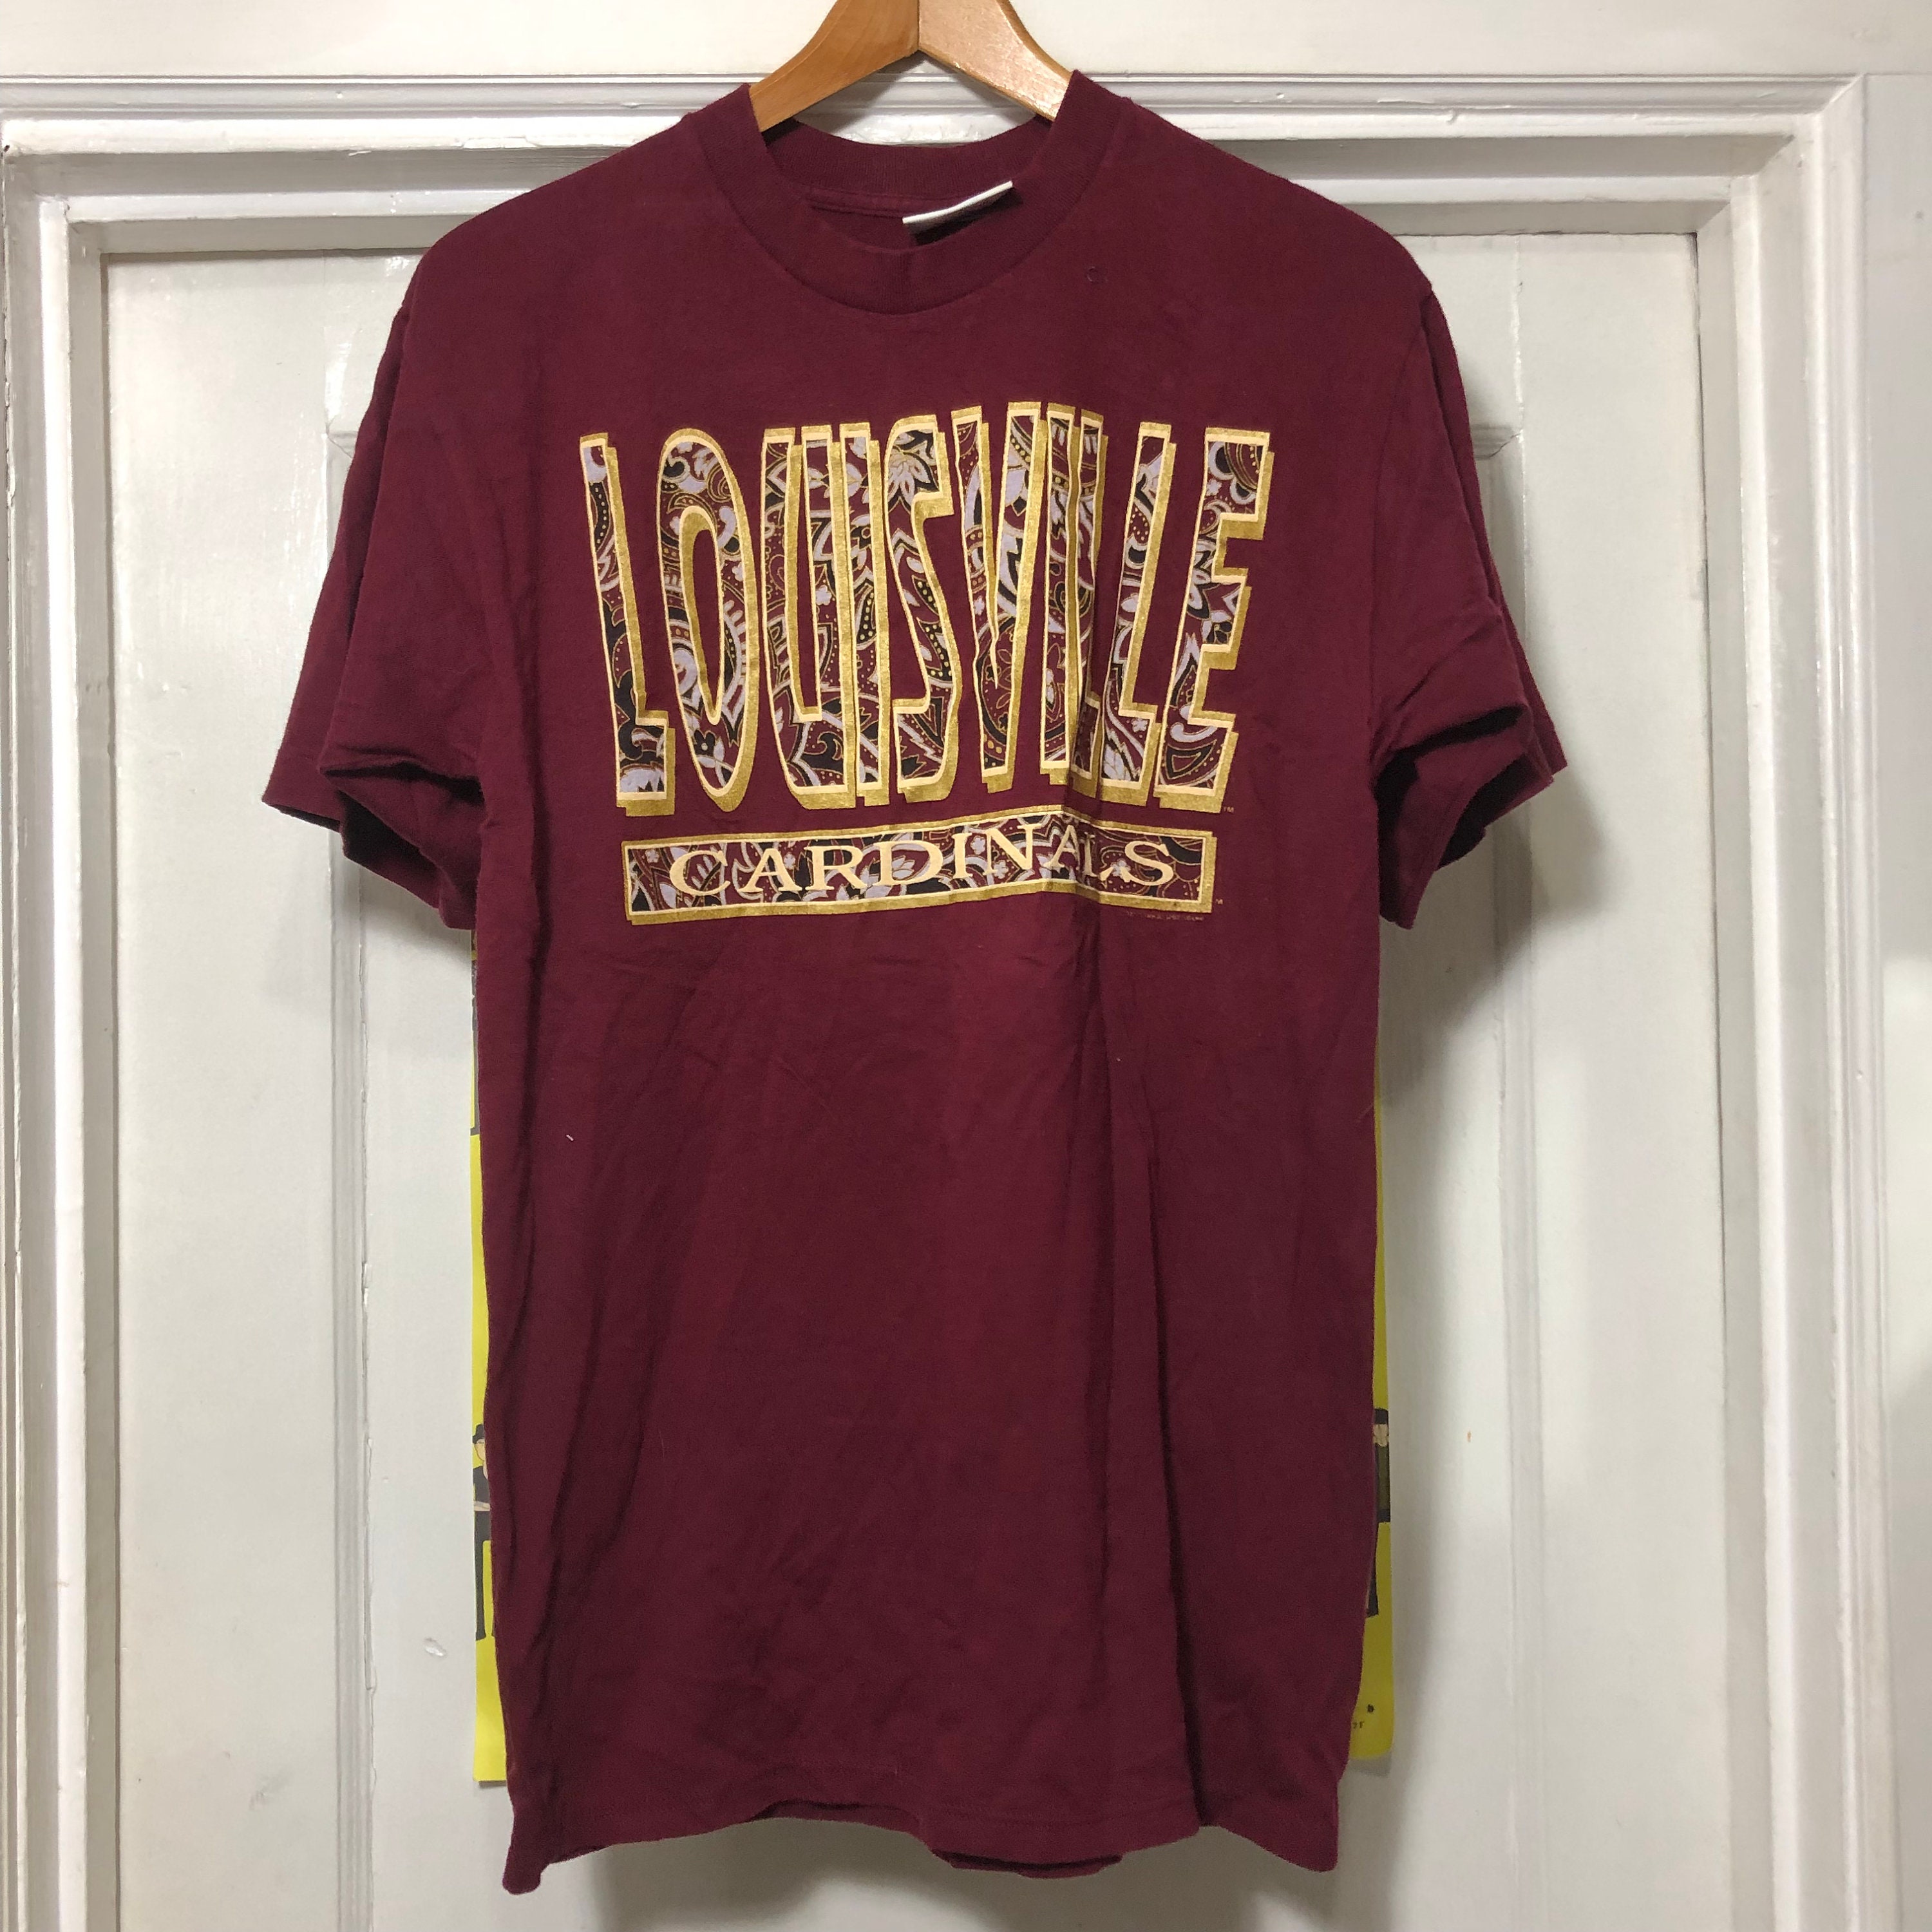 vintage 80s LOUISVILLE CARDINALS FOOTBALL T-Shirt MEDIUM single stitch